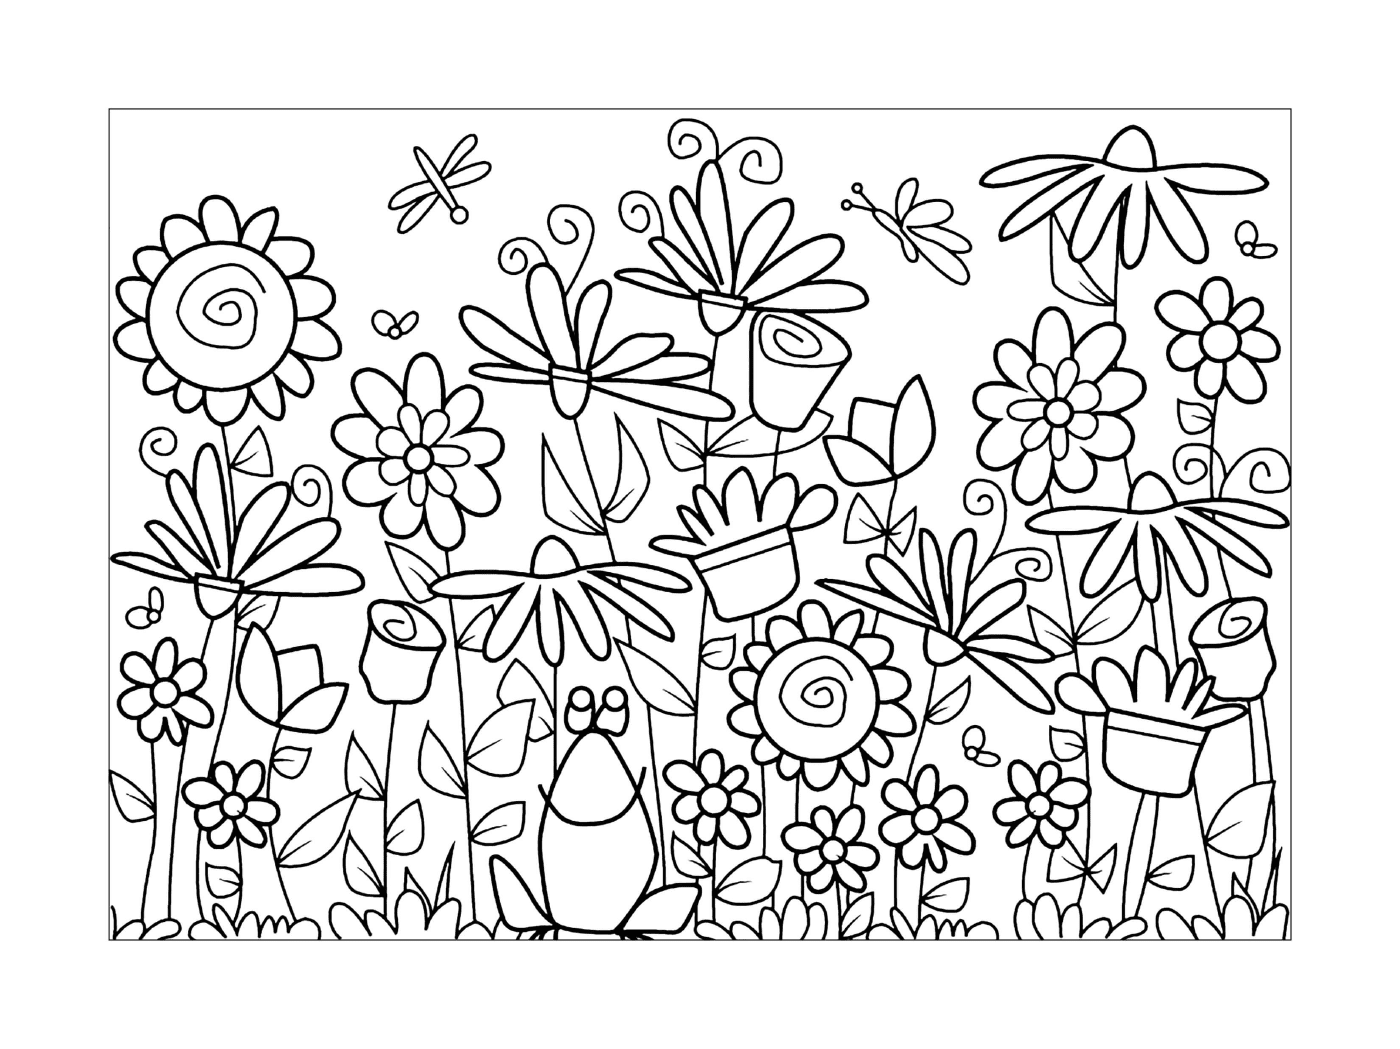  Giardino dei fiori 